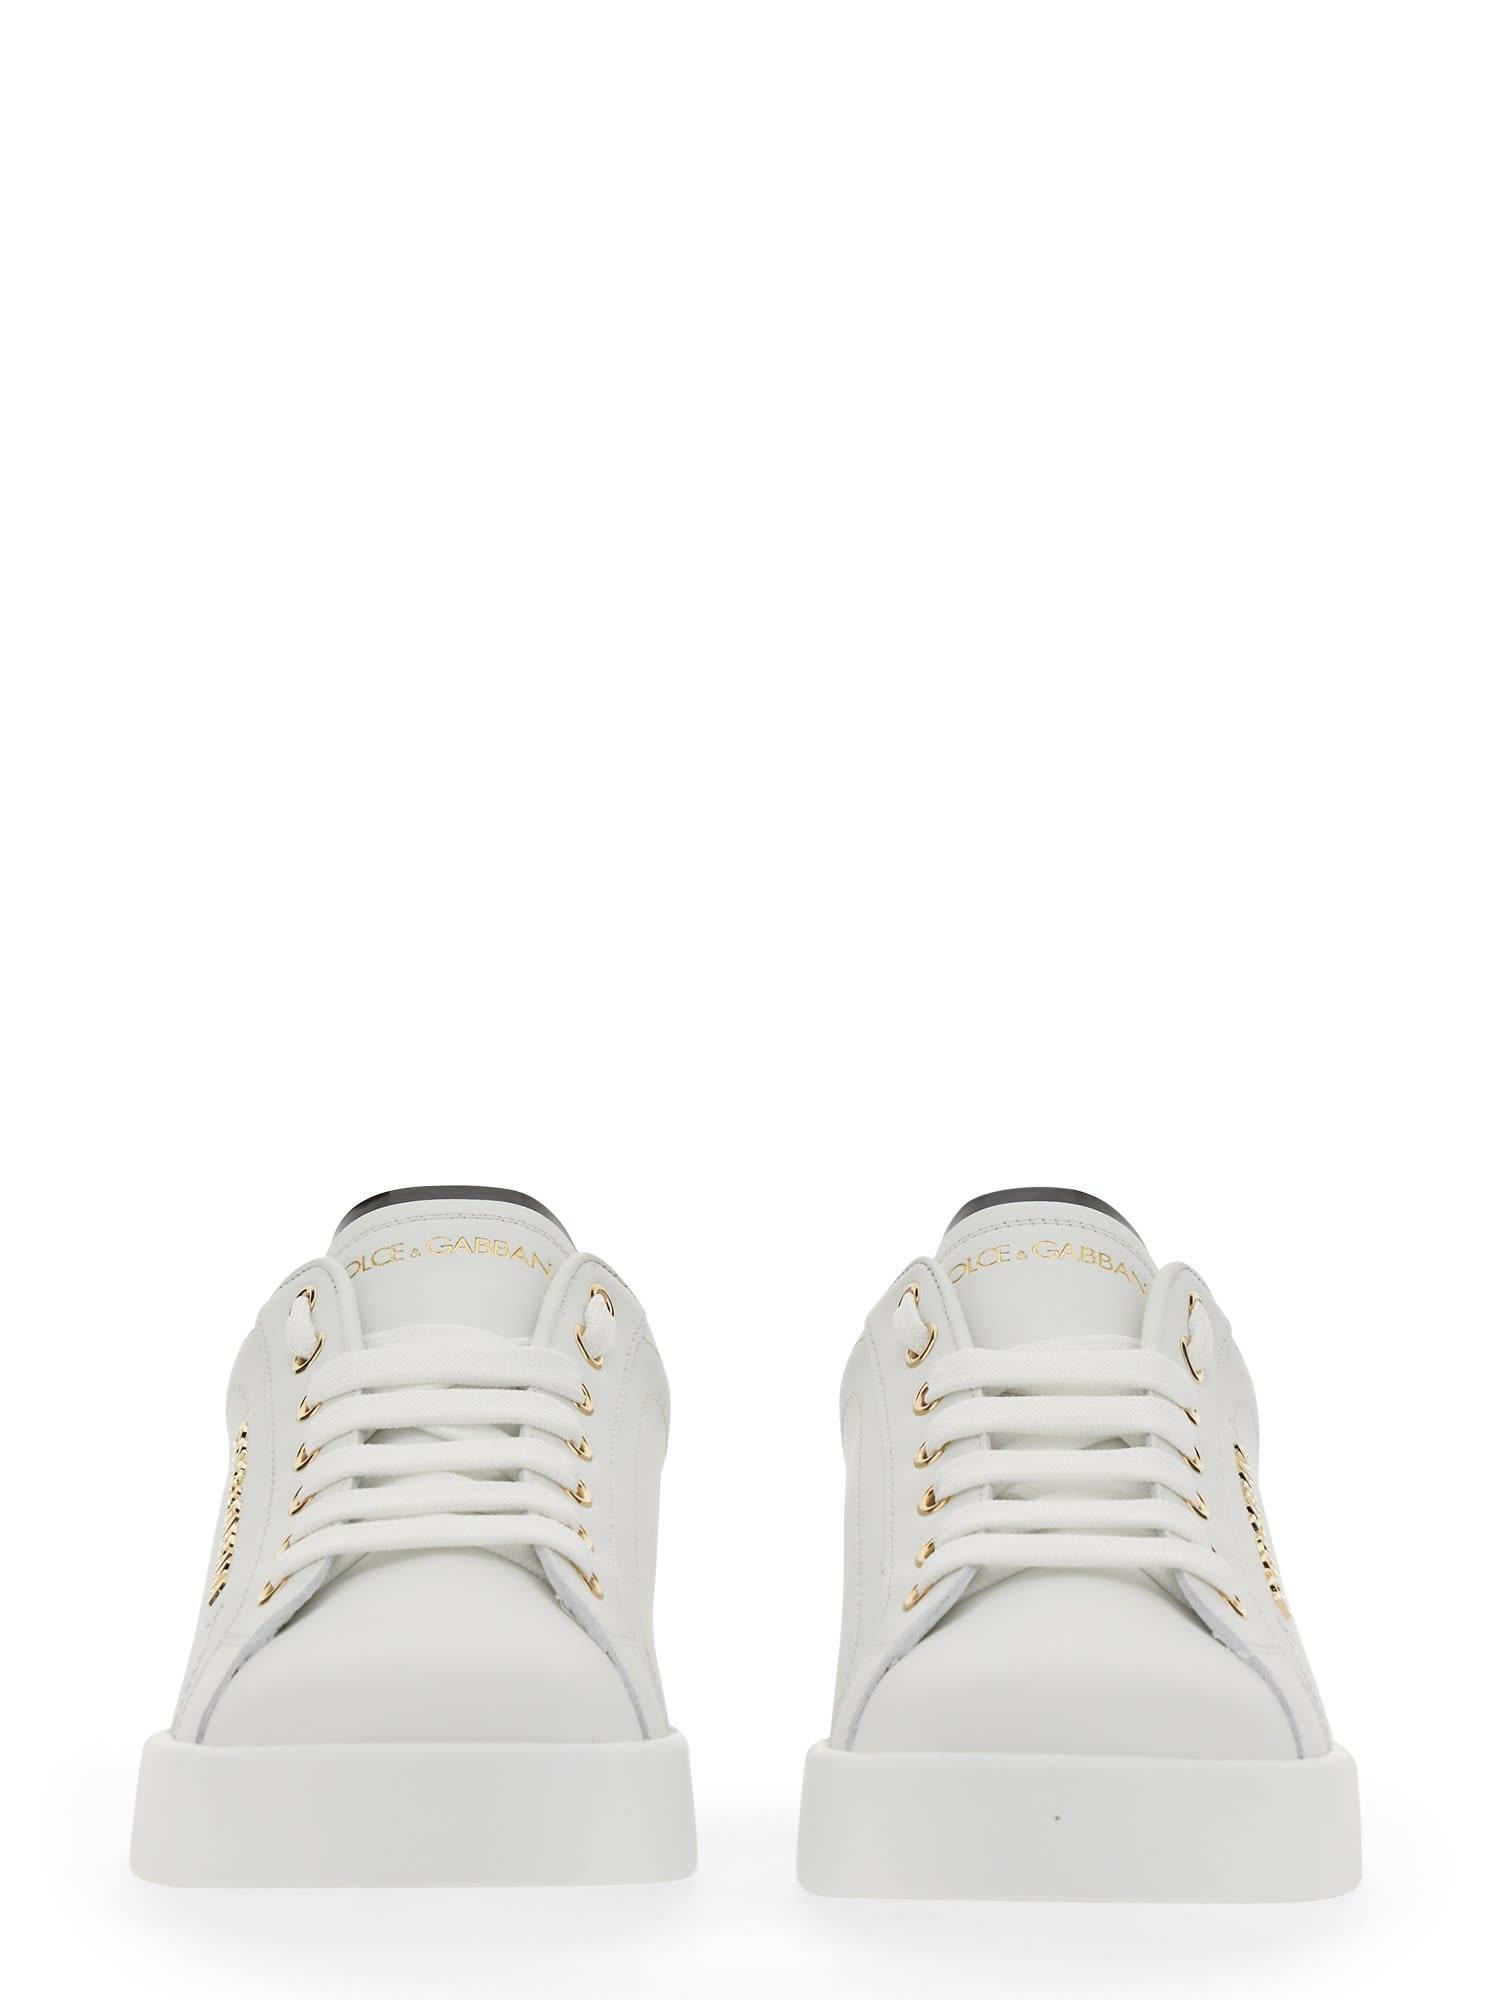 Dolce & Gabbana Portofino Sneaker in White | Lyst